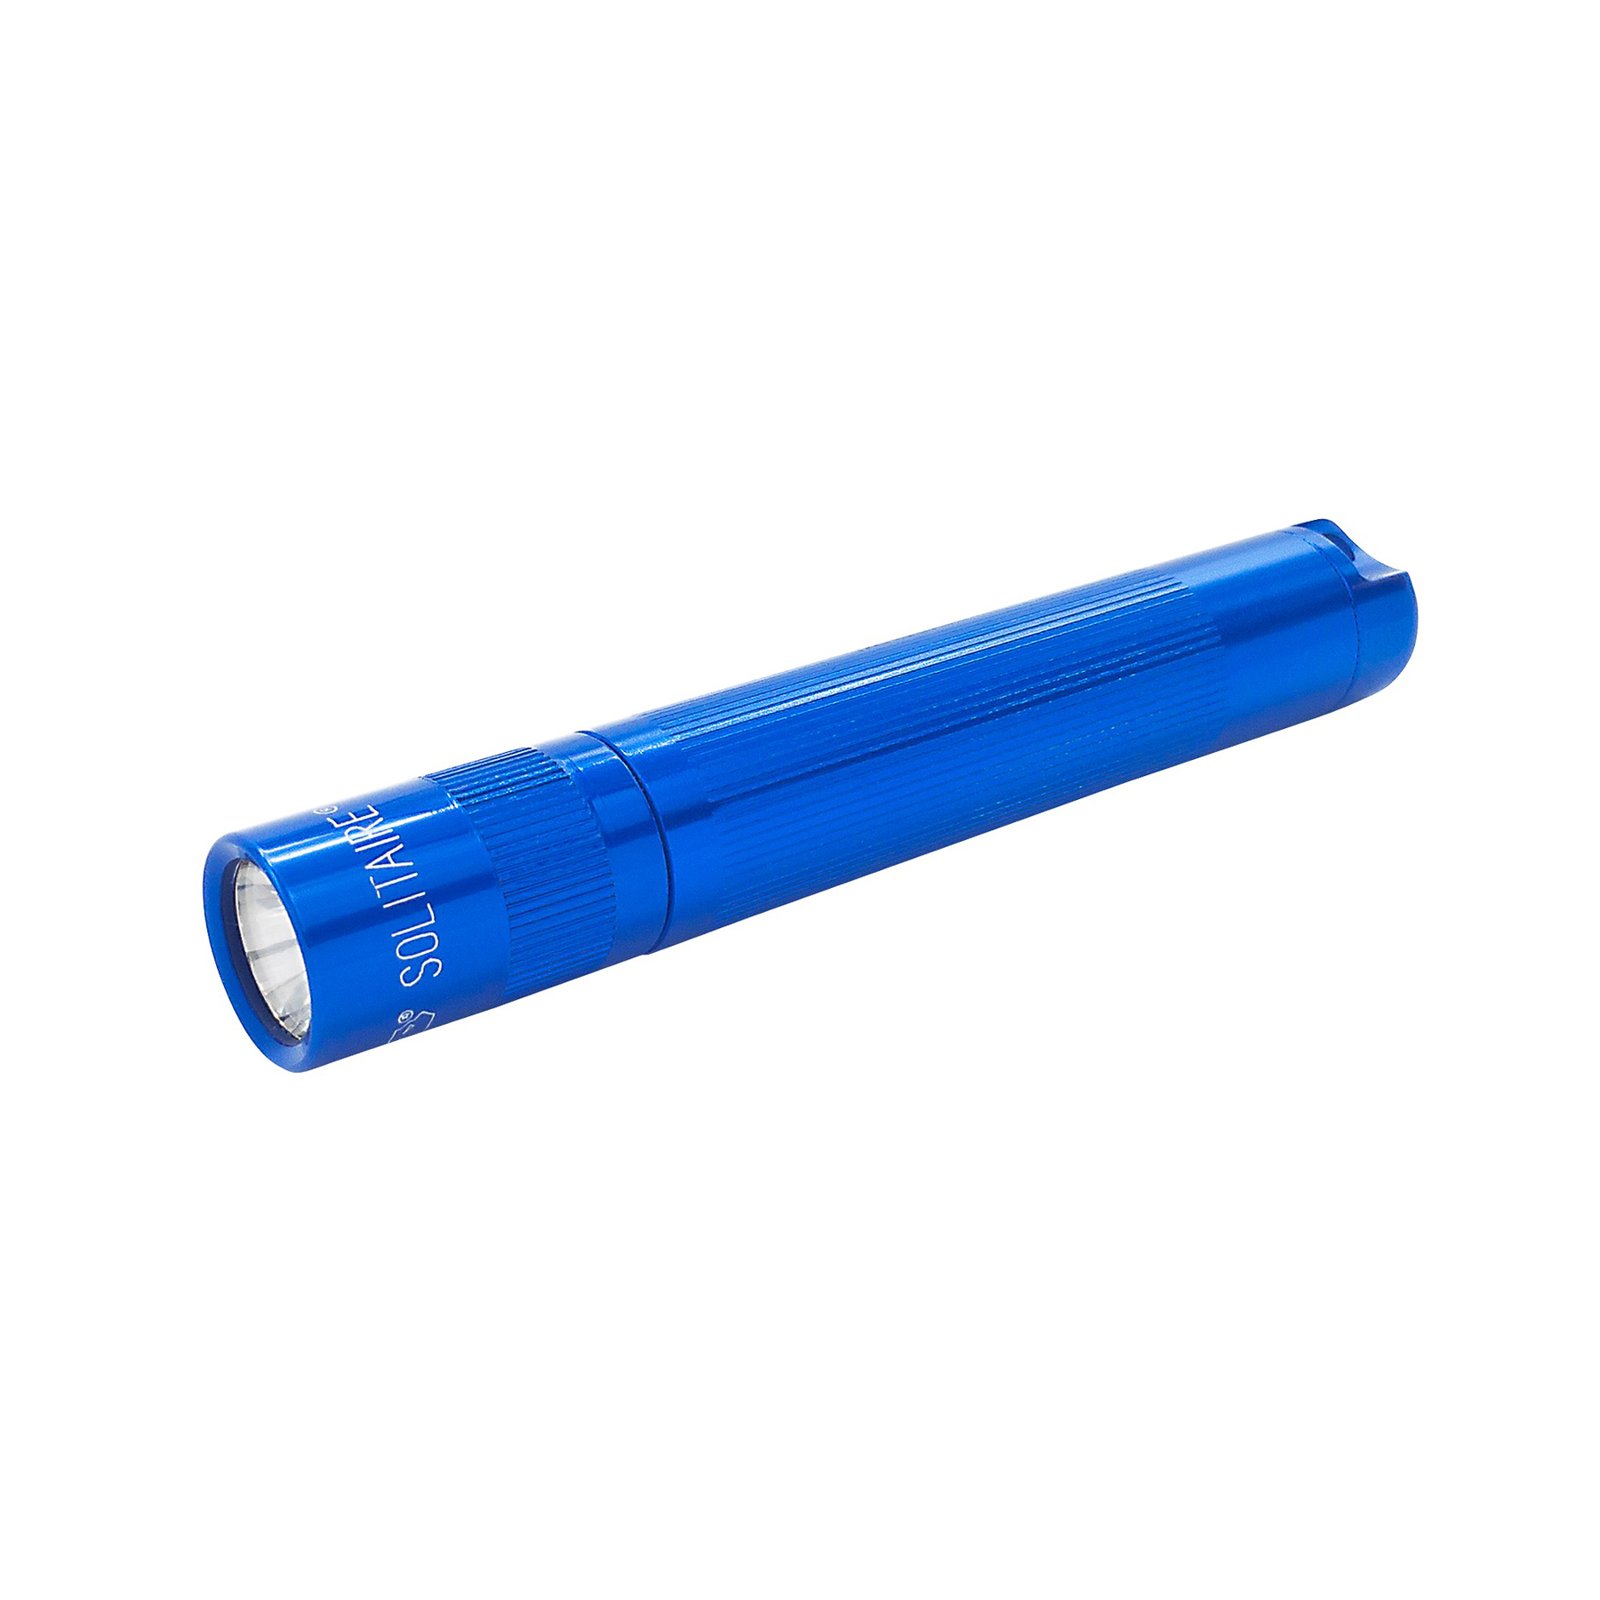 Maglite lampe de poche LED Solitaire, 1-Cell AAA, bleu